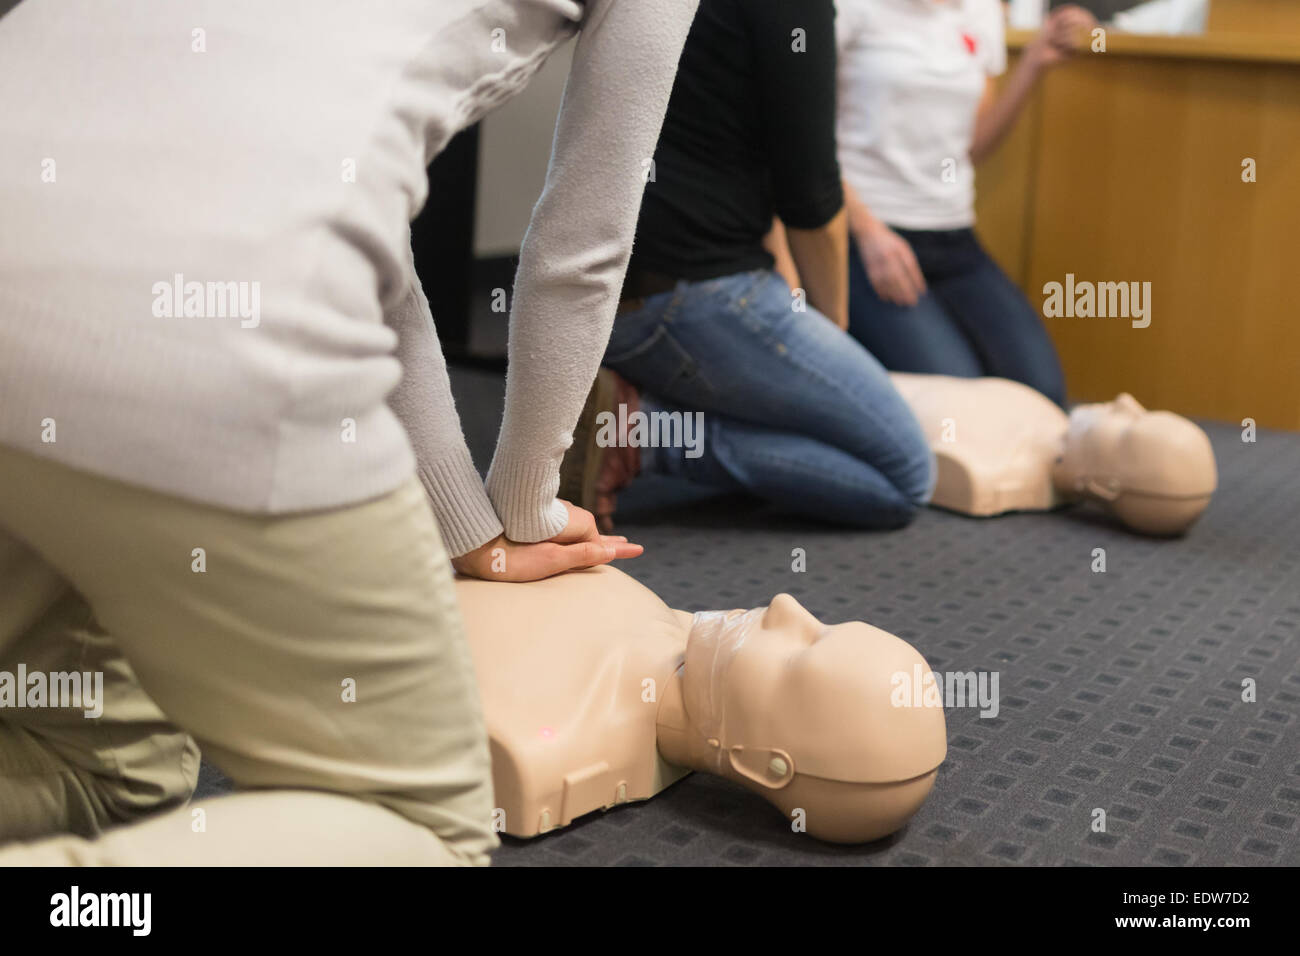 First aid CPR seminar. Stock Photo